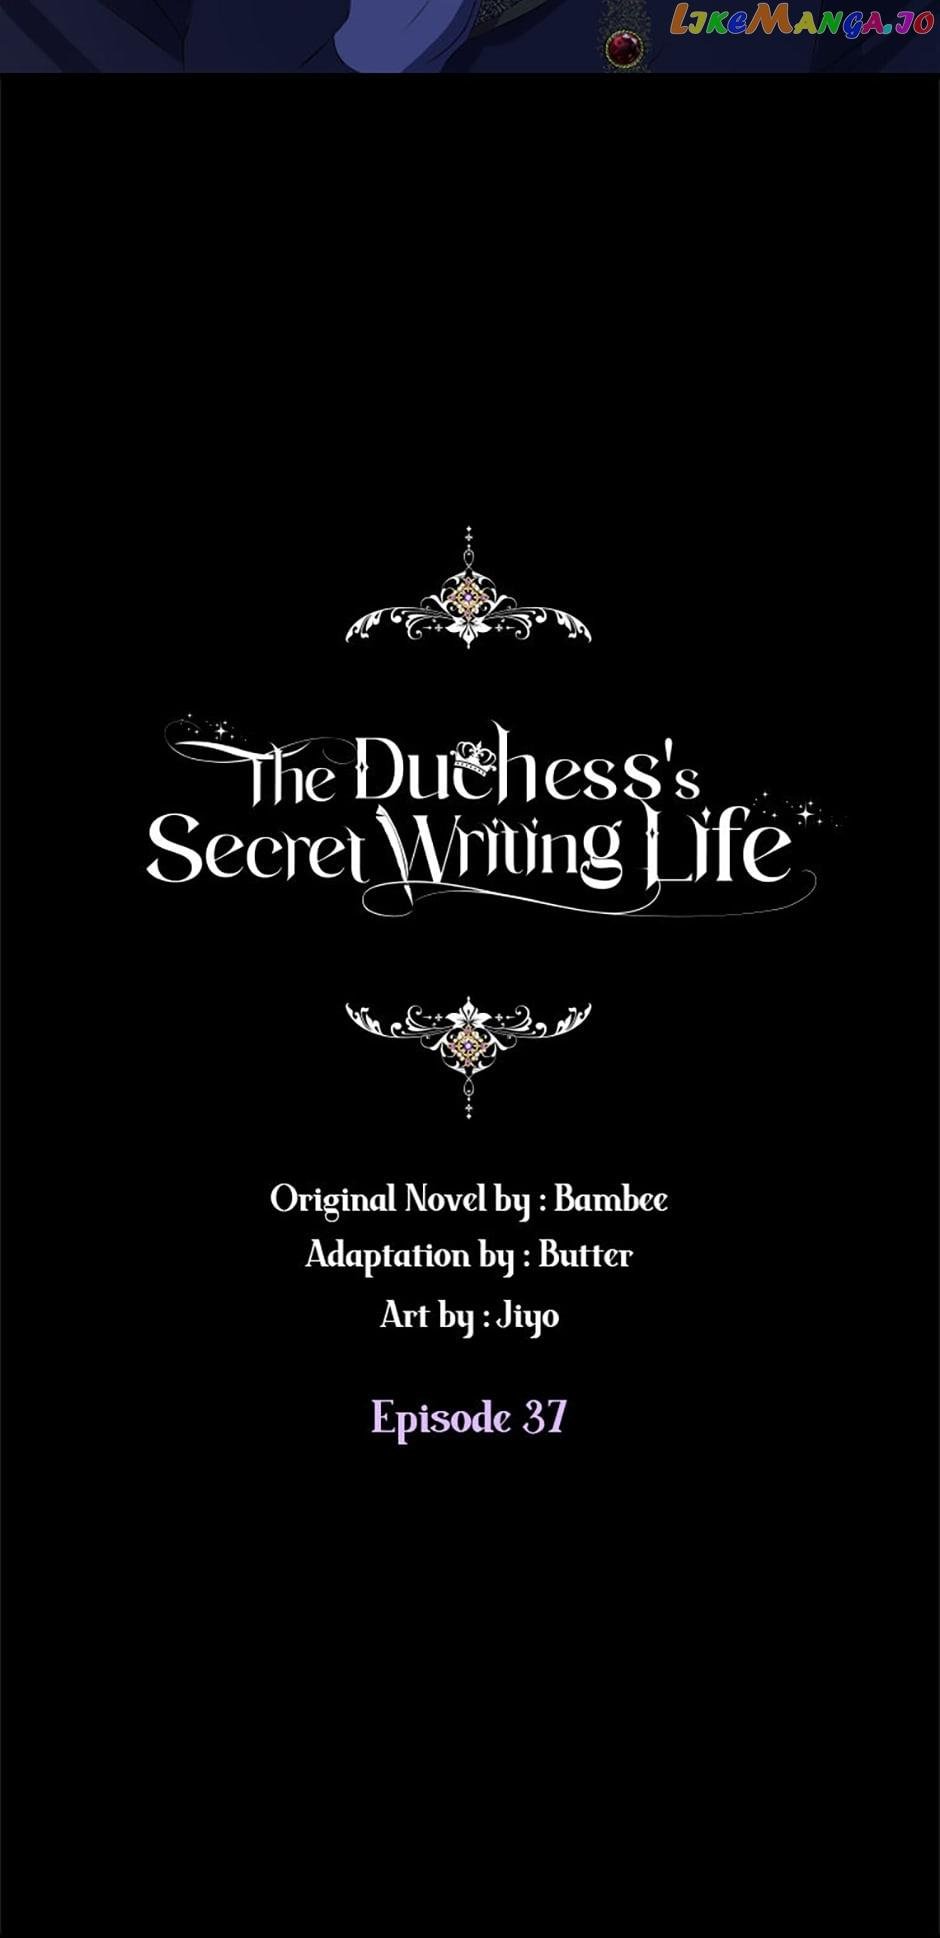 The Duchess’ Secret Writings chapter 37